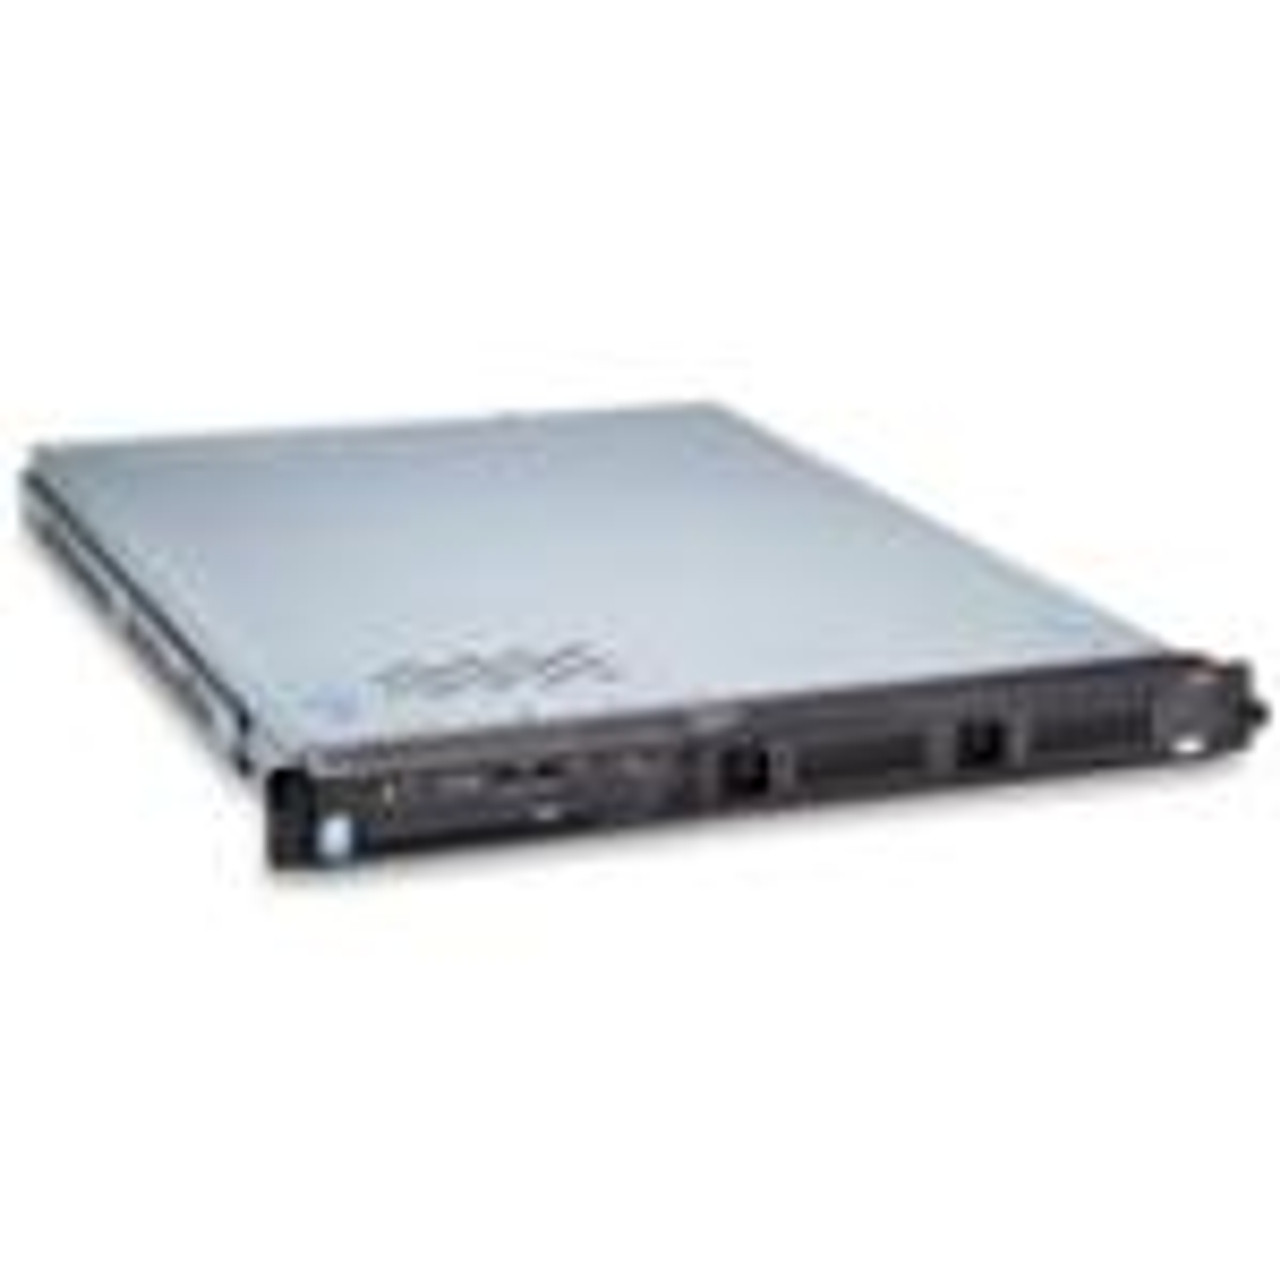 3CRC201A 3Com VCX Connect 200 IP Communication Platform (Optional Redundant Server) 2 x 10/100/1000Base-T LAN